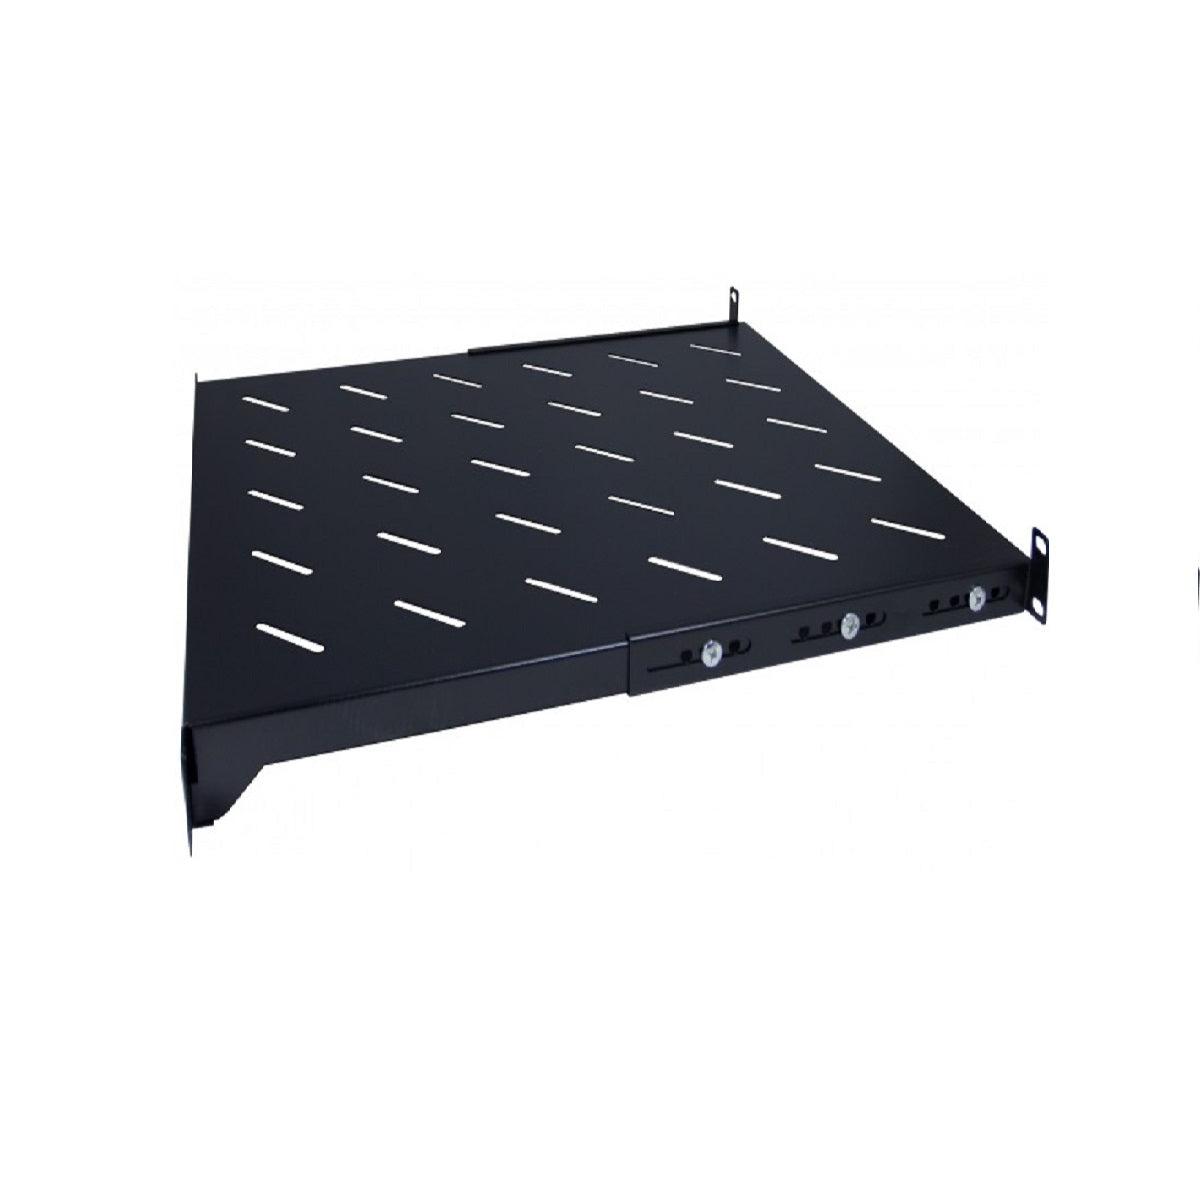 Adjustable Shelves RR-S21 suitable for Floor Standing Cabinets